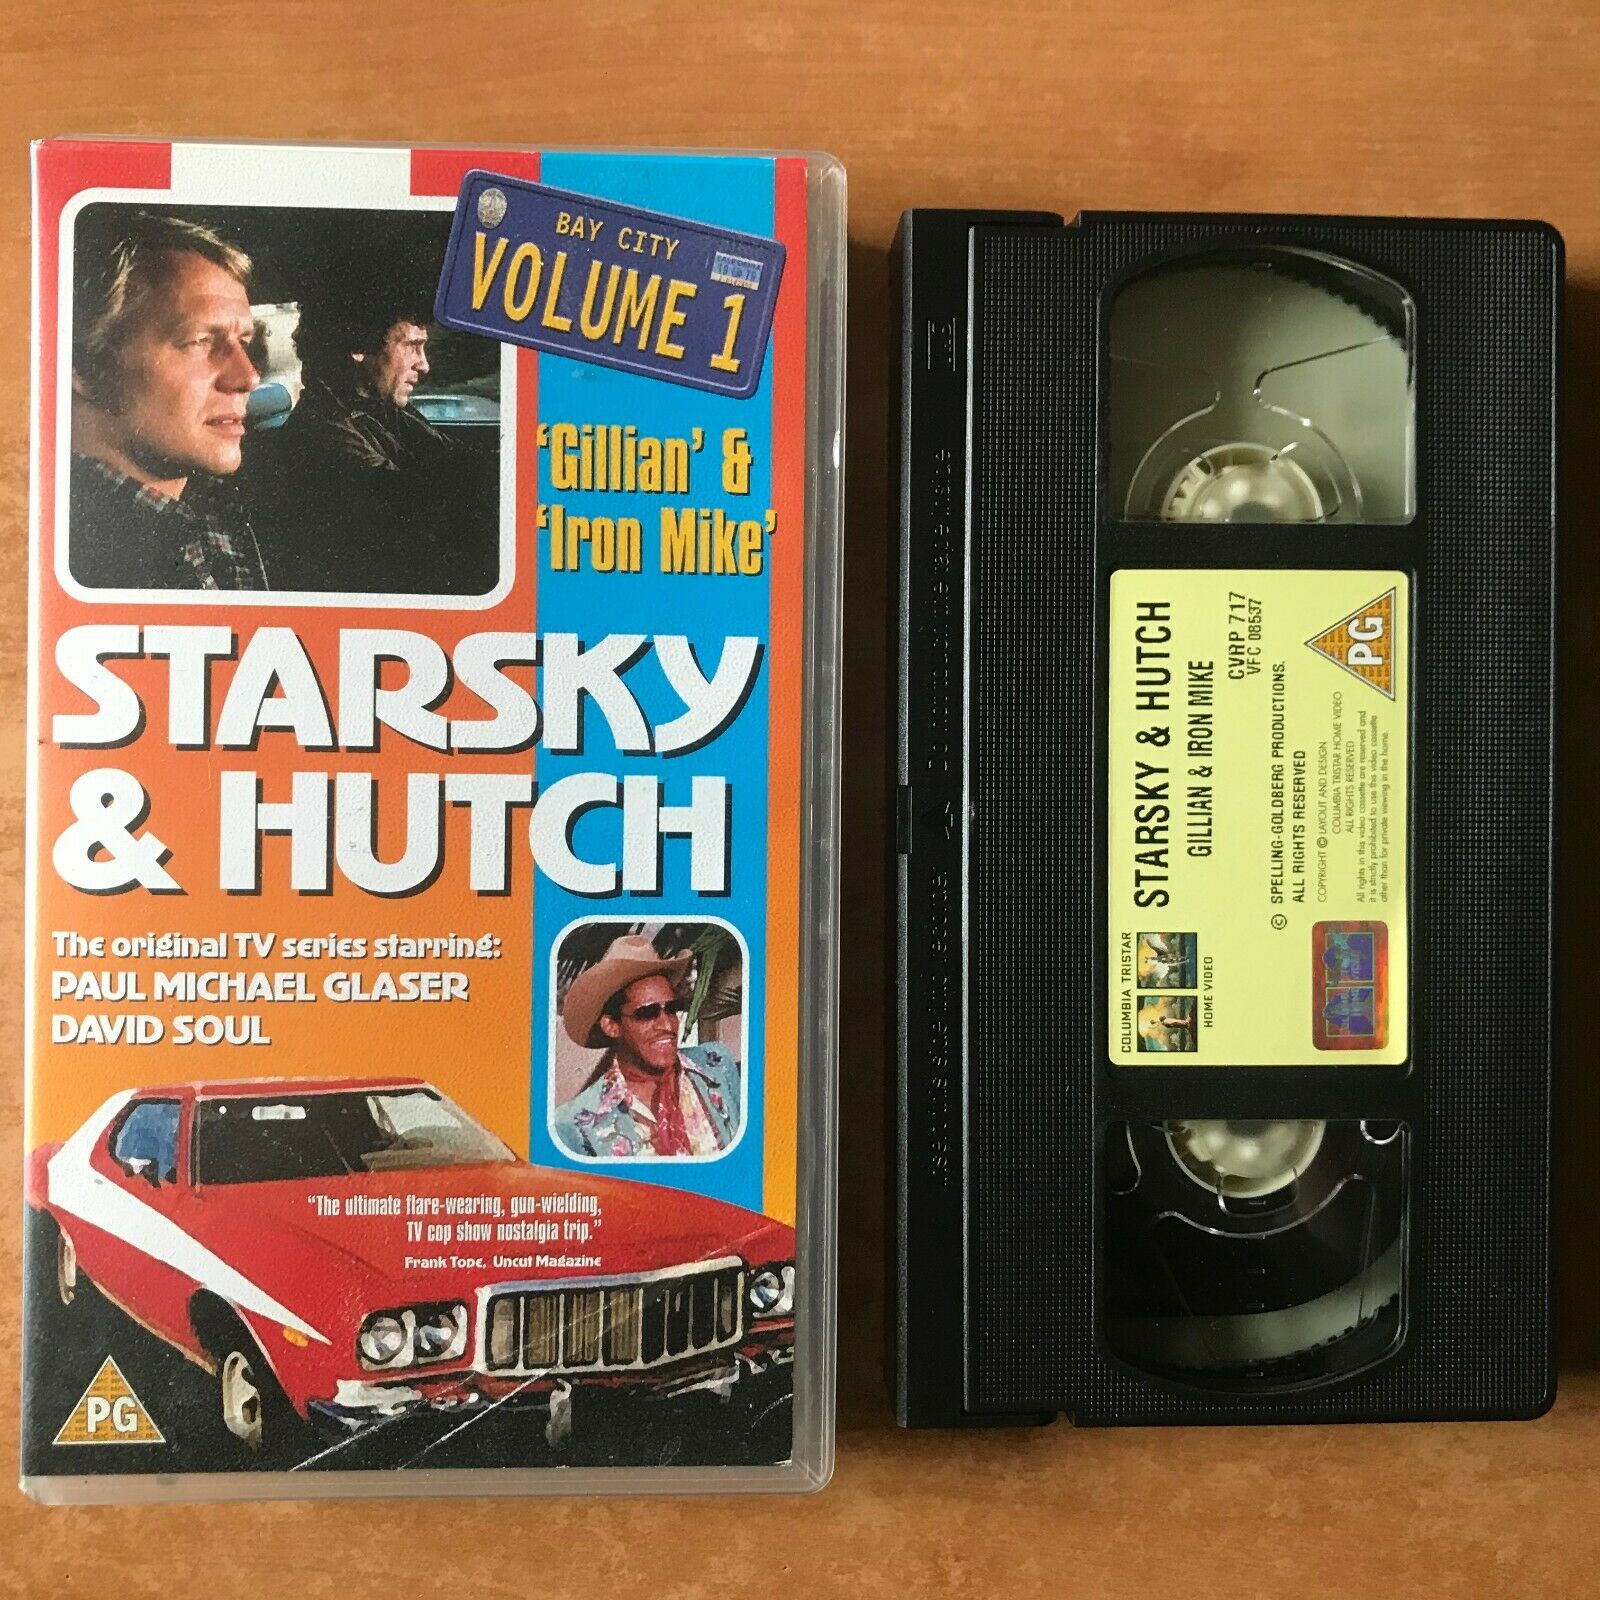 Starsky & Hutch (Vol. 1): "Gillian"; Action Series - Paul Michael Glaser - VHS-